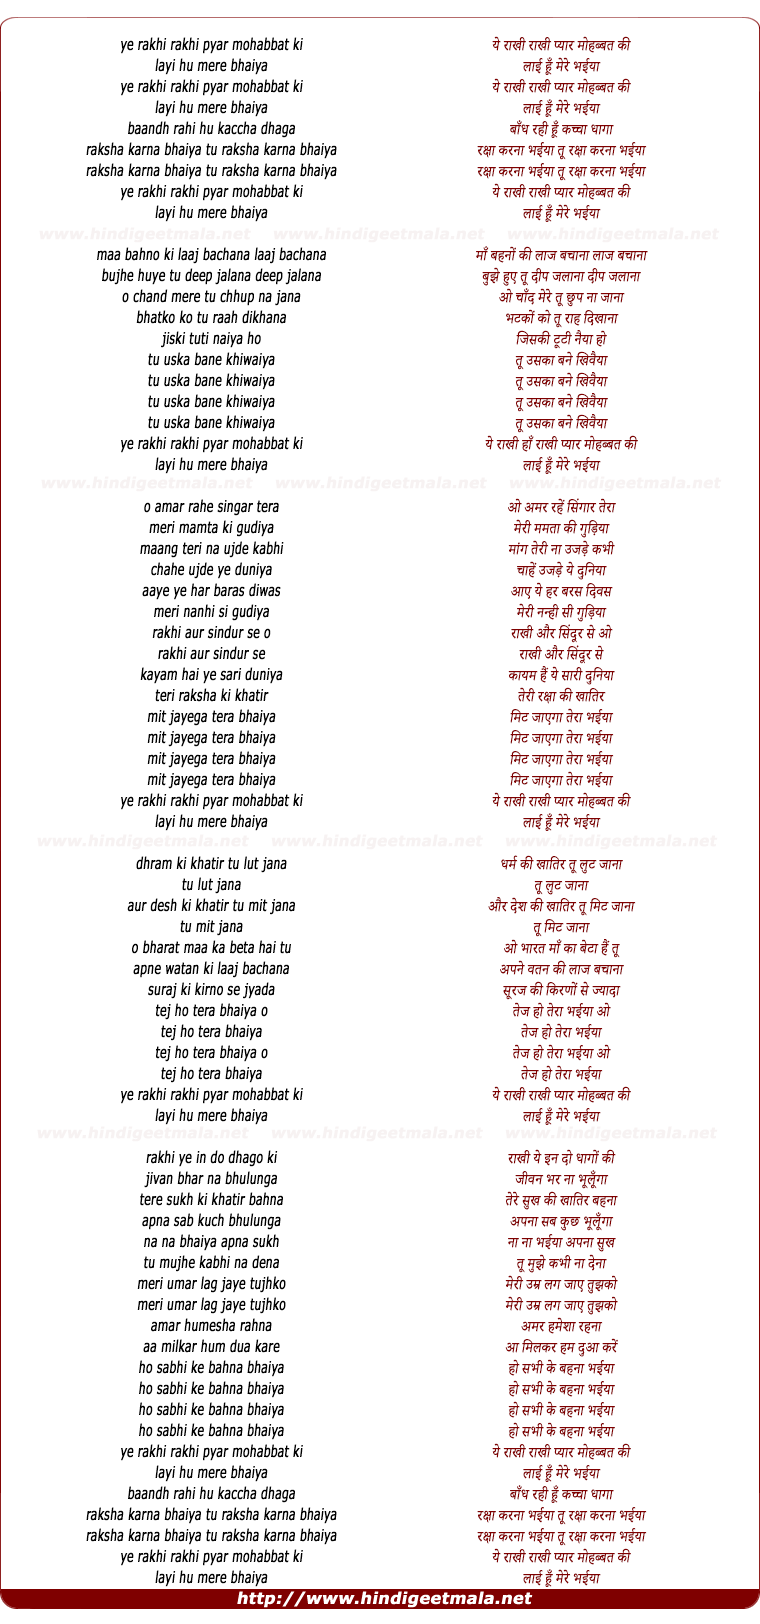 lyrics of song Ye Rakhi Pyar Mohabbat Ki